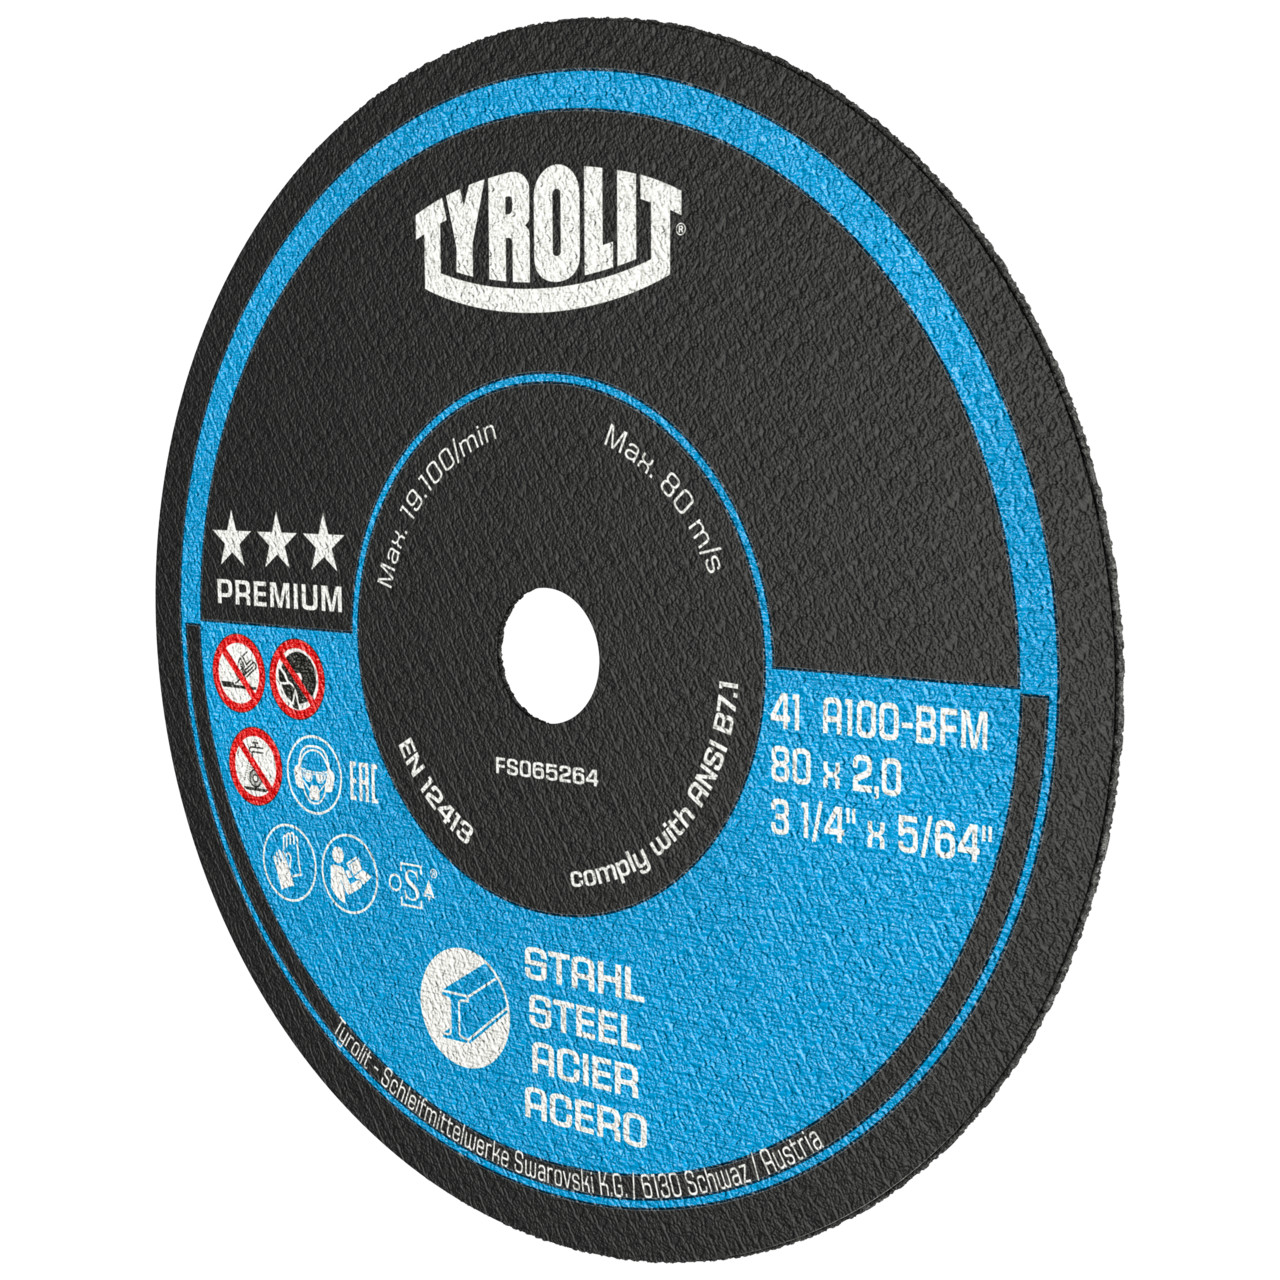 Tyrolit Cutting discs DxDxH 63x1x10 For steel, shape: 41 - straight version, Art. 699330